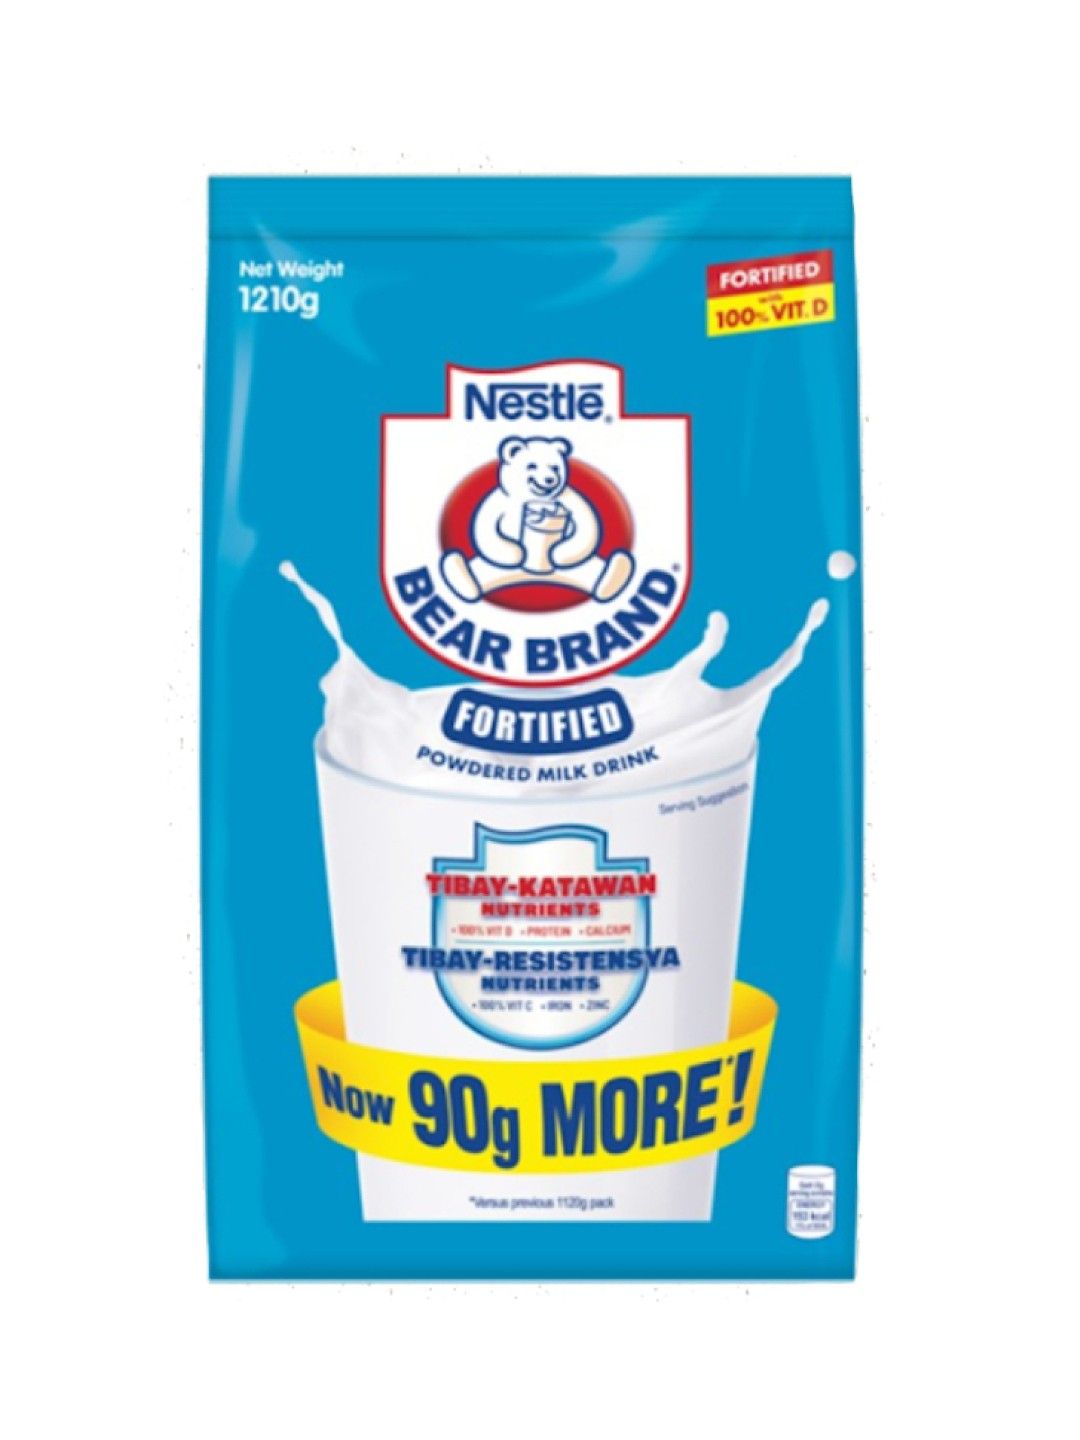 Bear Brand Fortified Powdered Milk Drink (1.21kg)